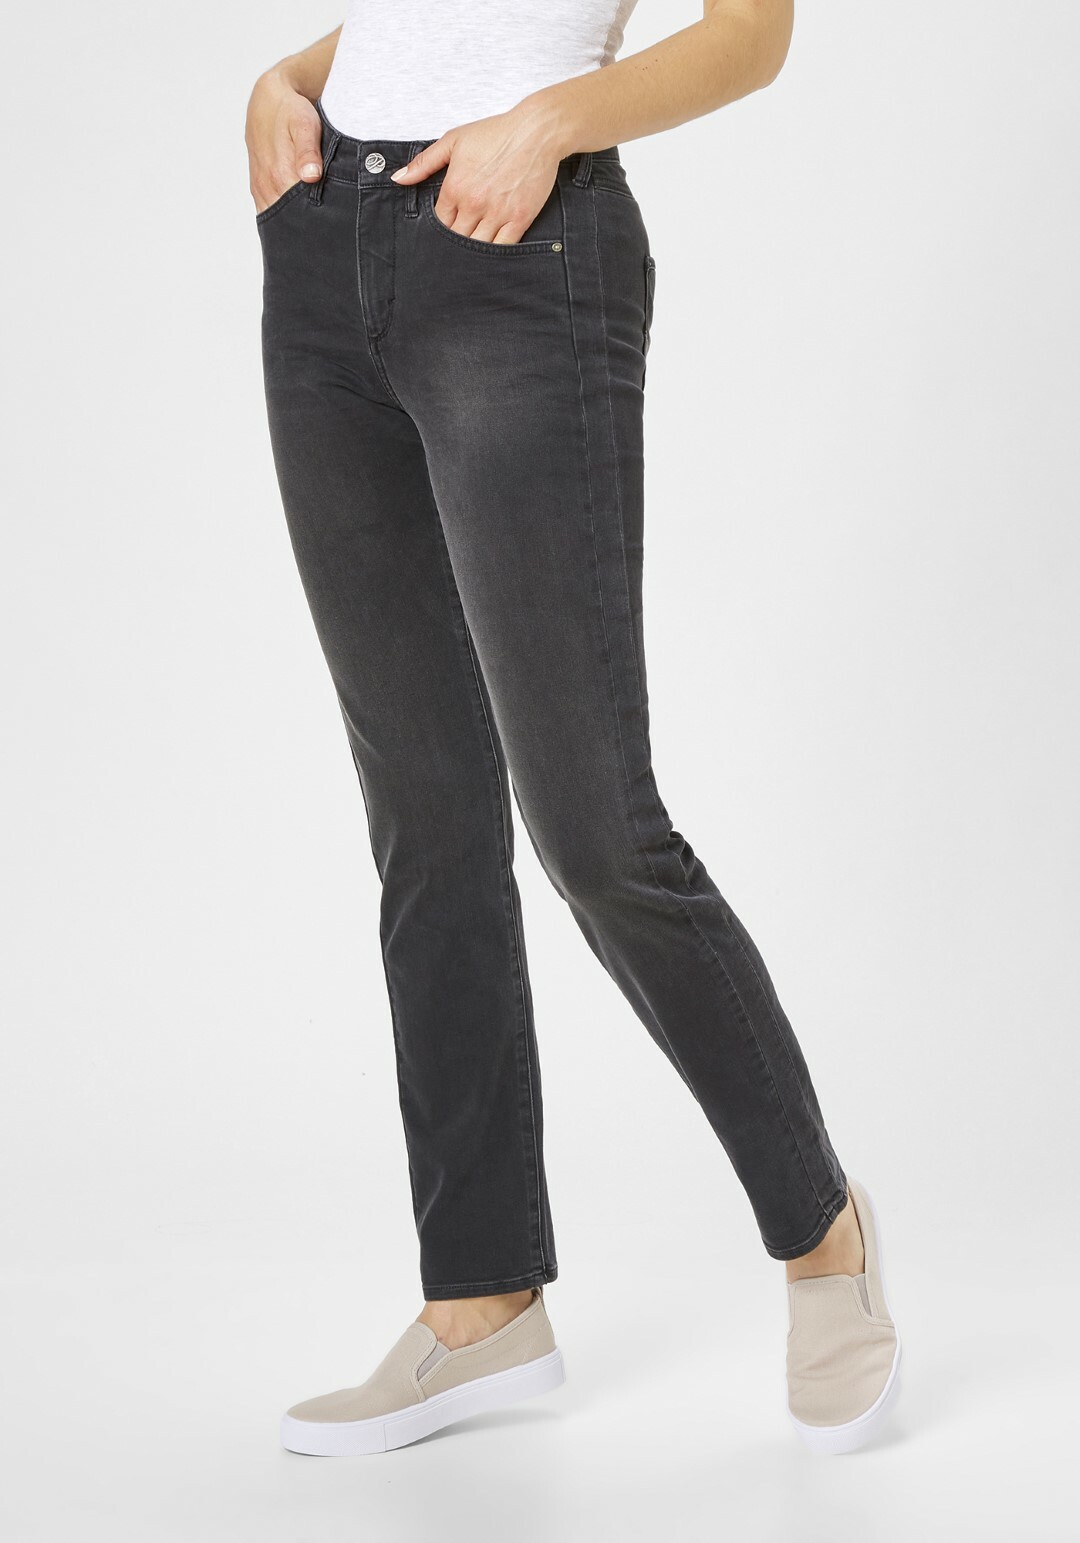 PADDOCKS 5-Pocket Jeans in Grau, Hellgrau 